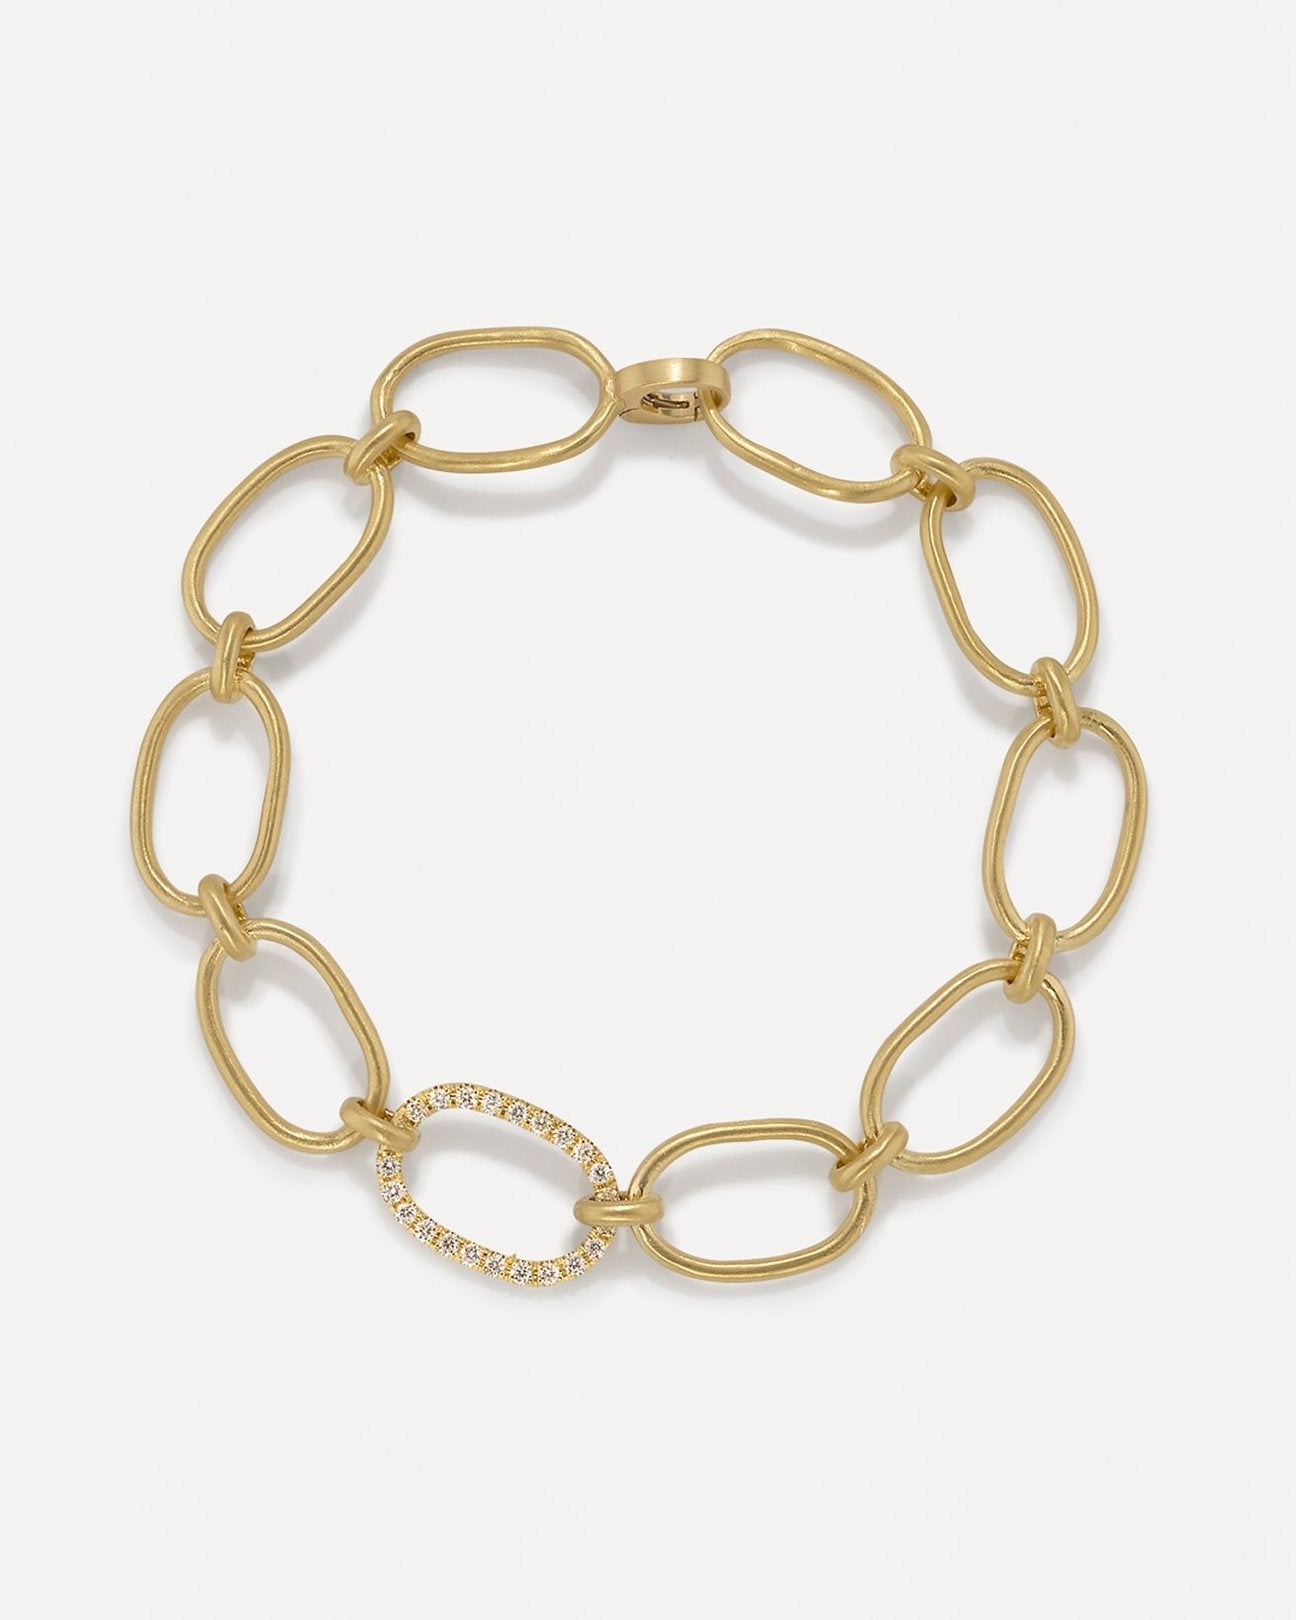 B147YG Large Oval Pave Link Chain Bracelet, Yellow Gold-18k